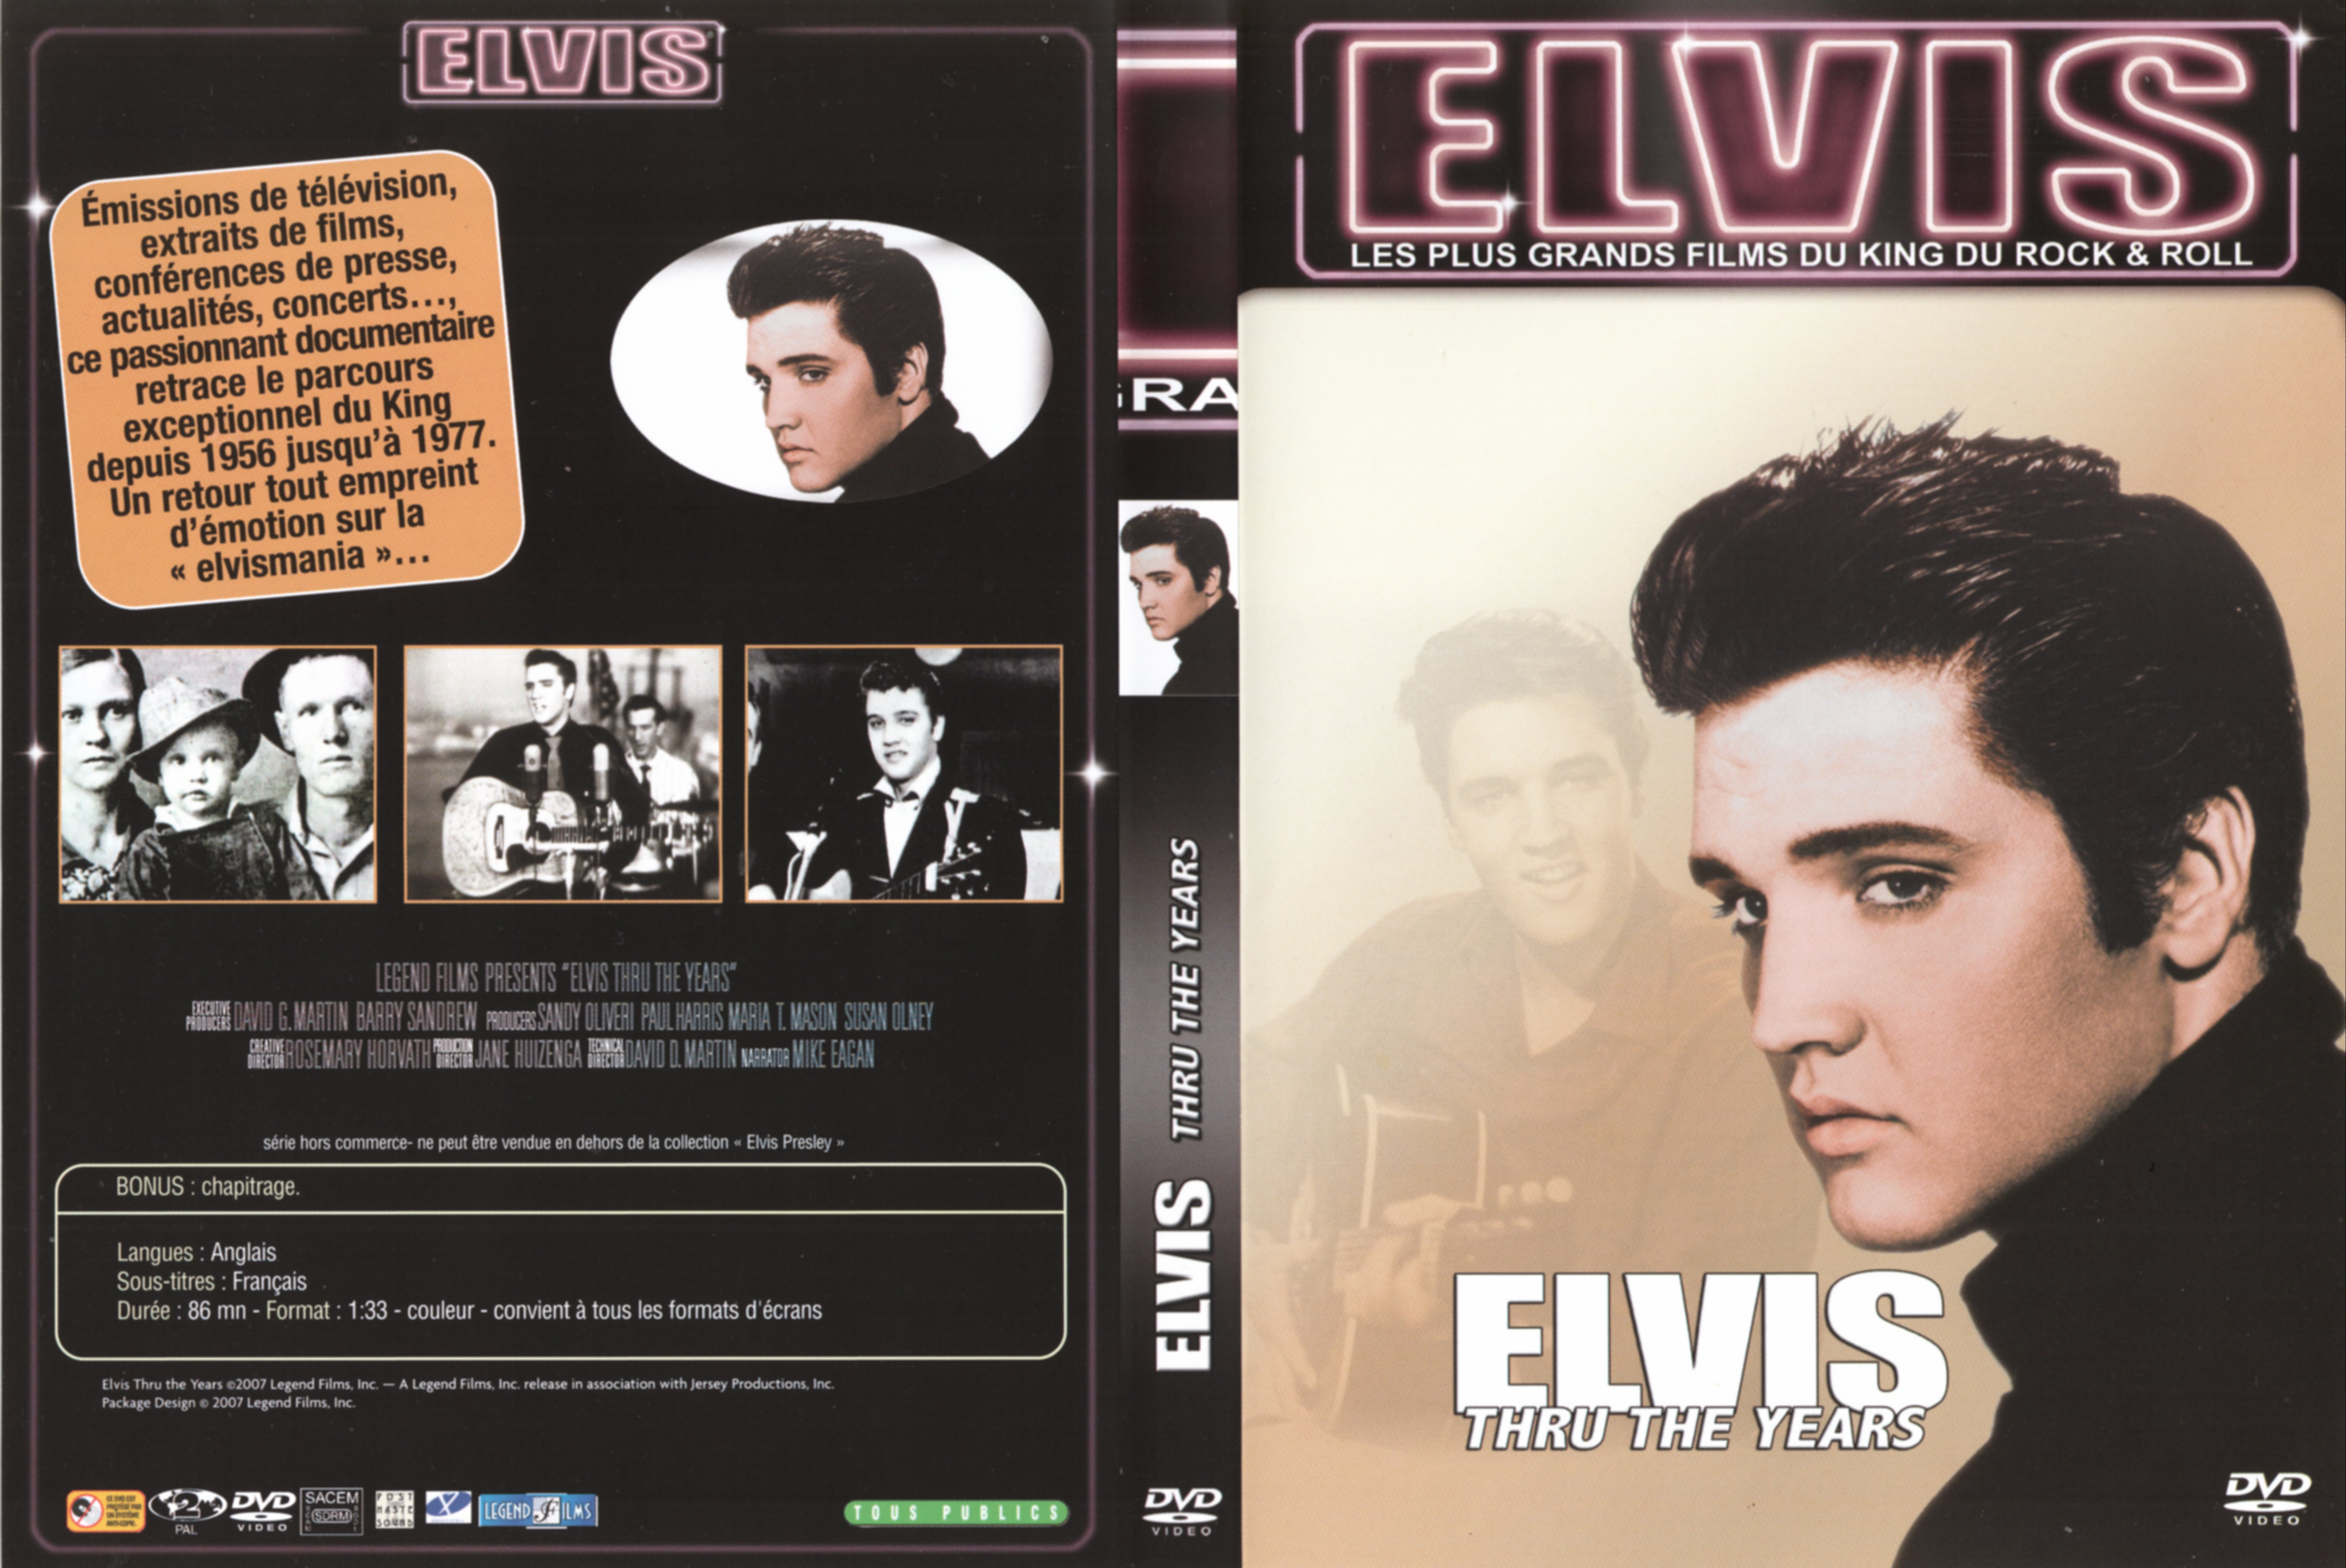 Jaquette DVD Elvis - Thru the years